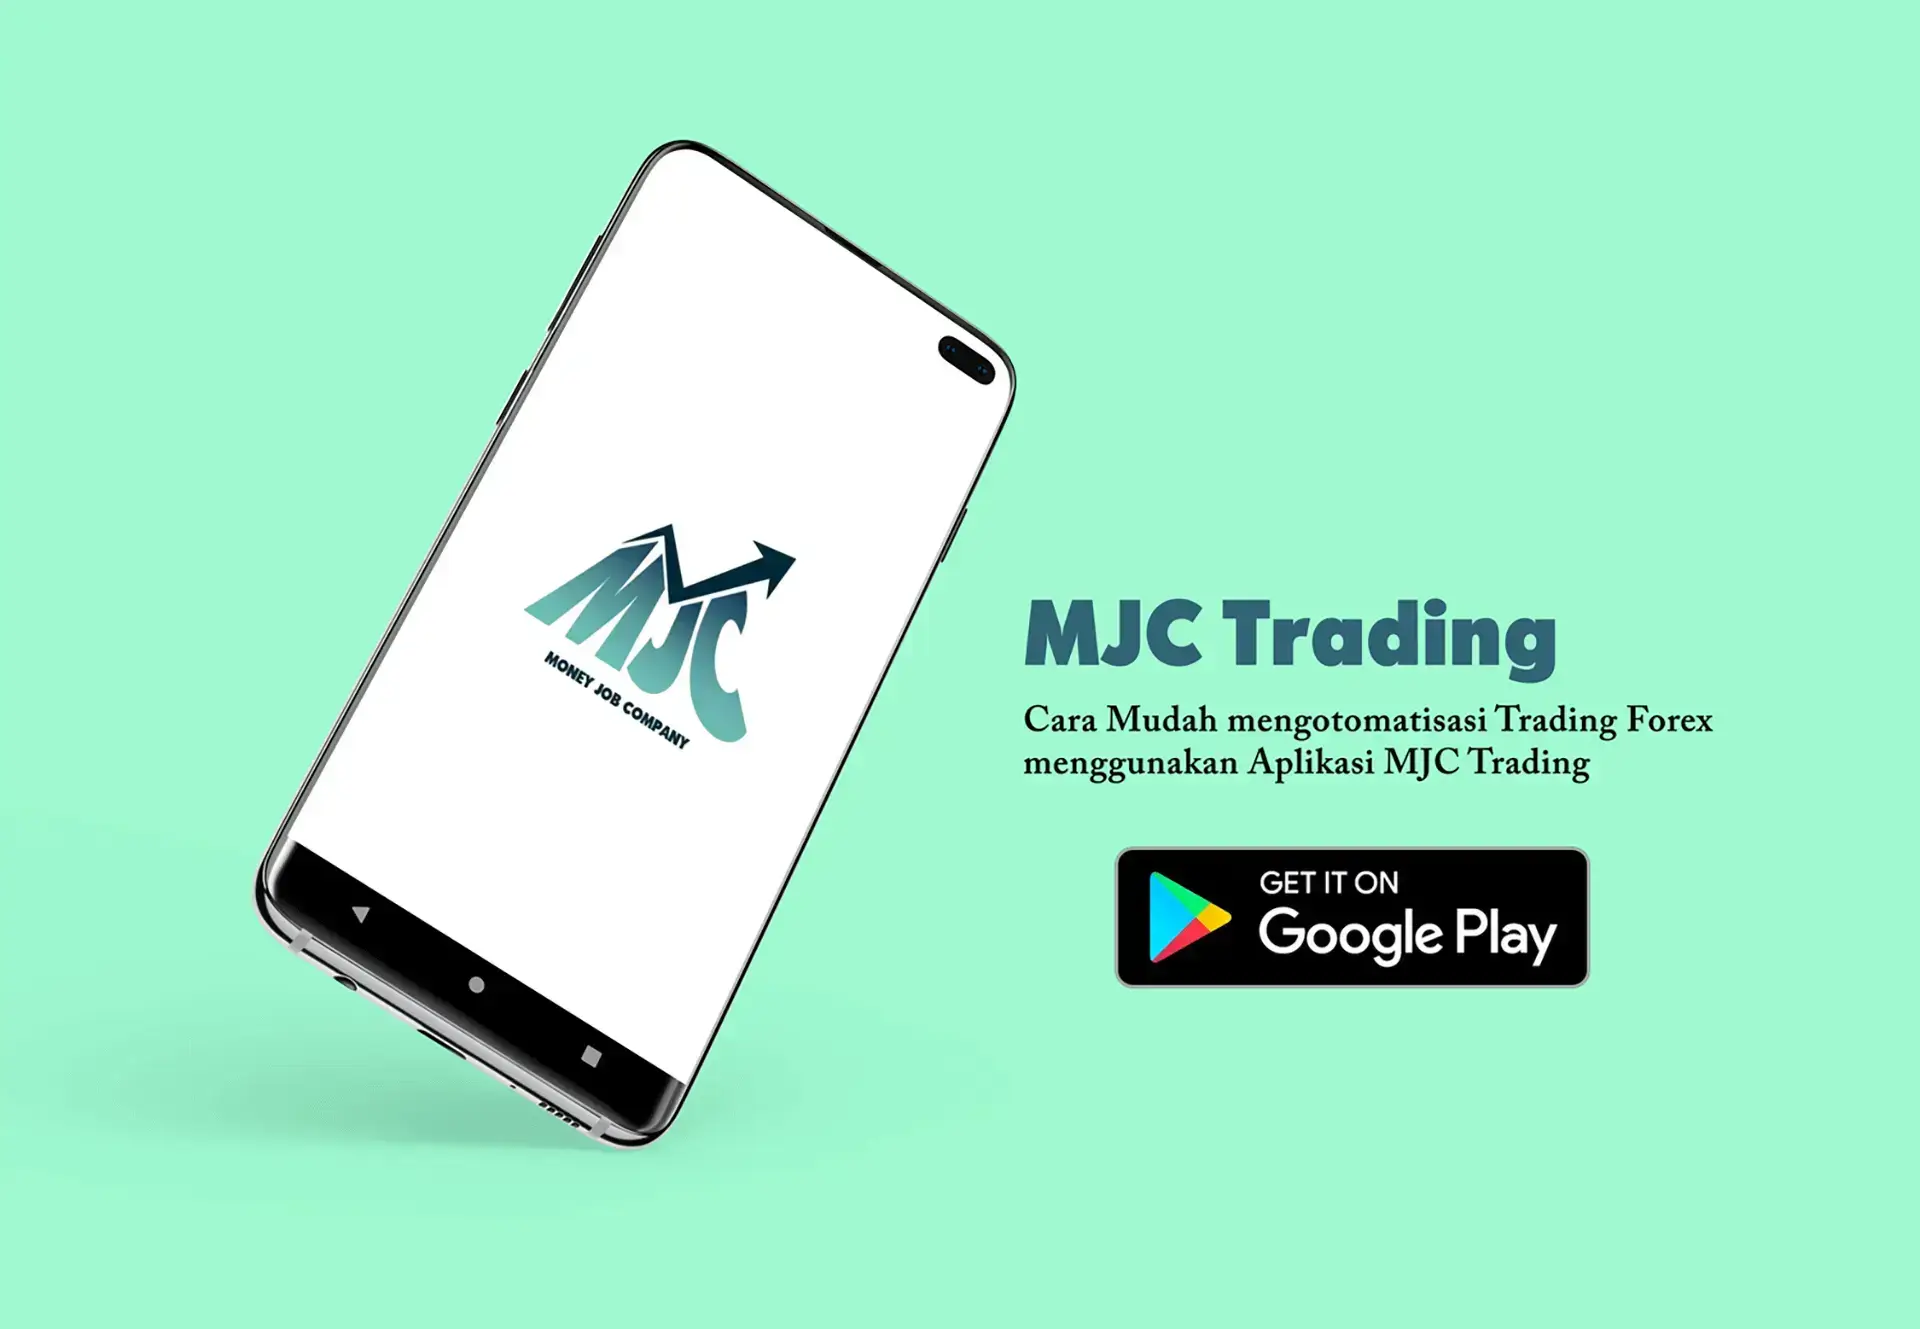 MJC Trading